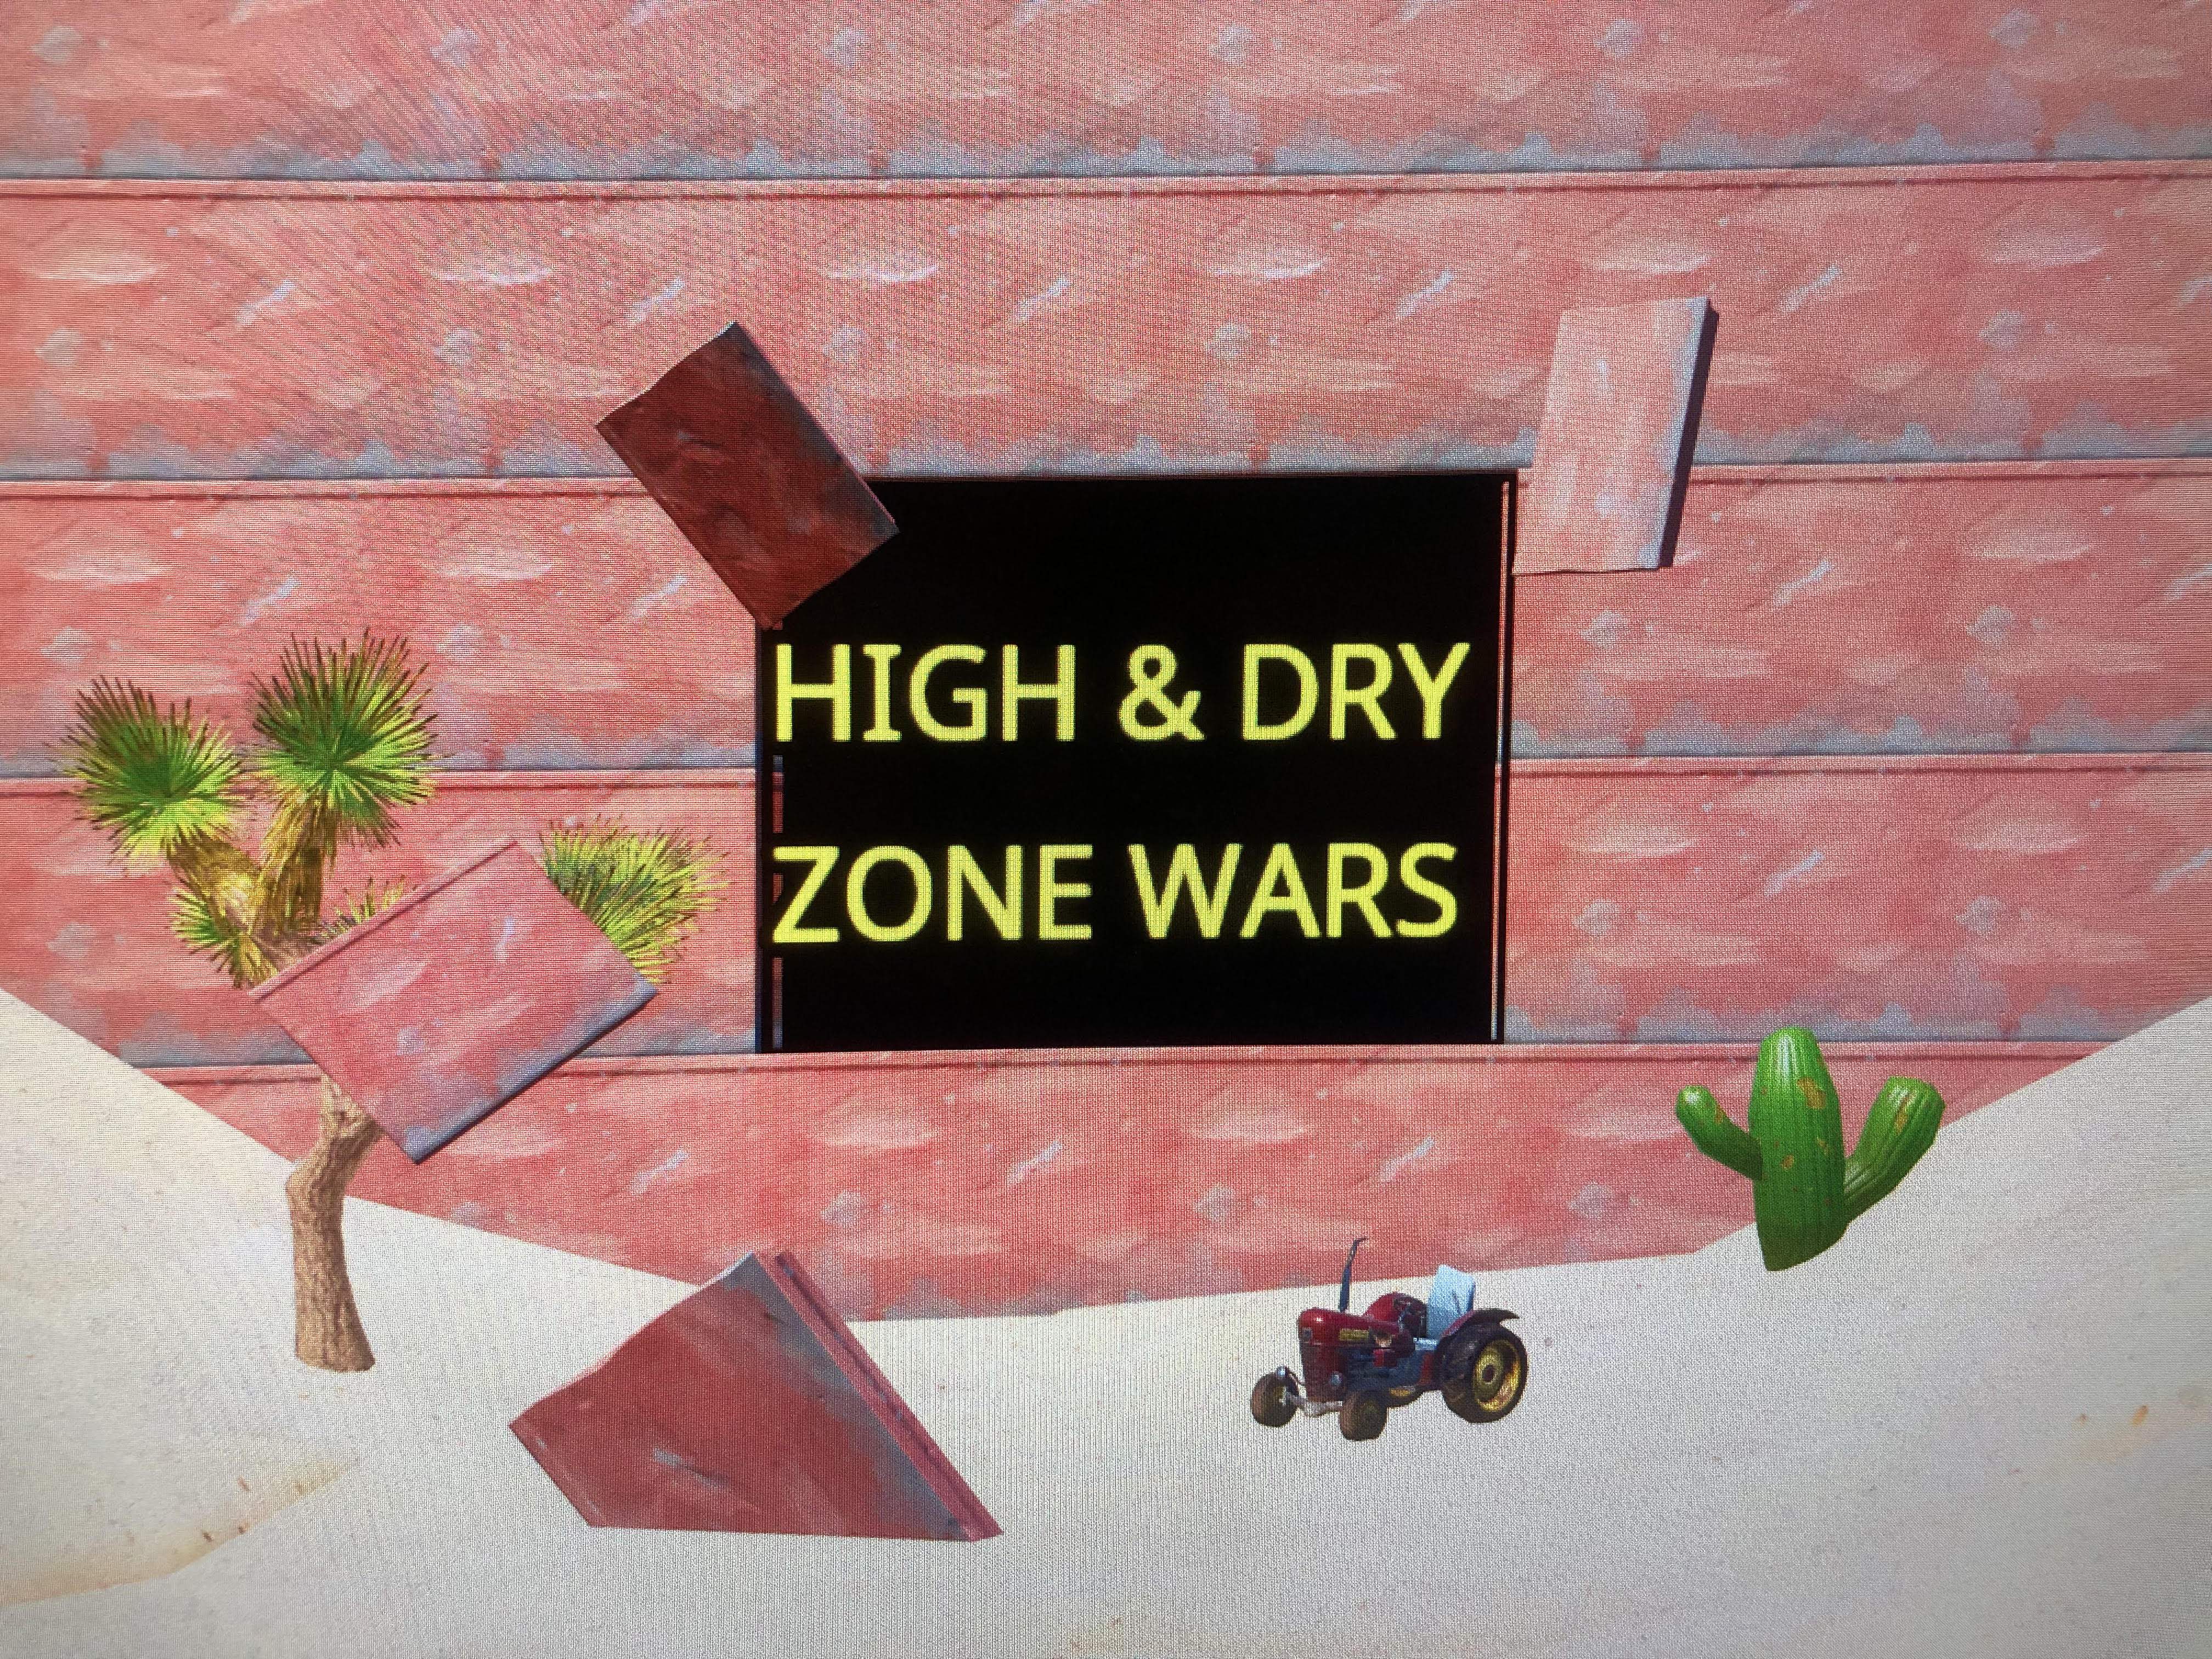 HIGH & DRY ZONE WARS